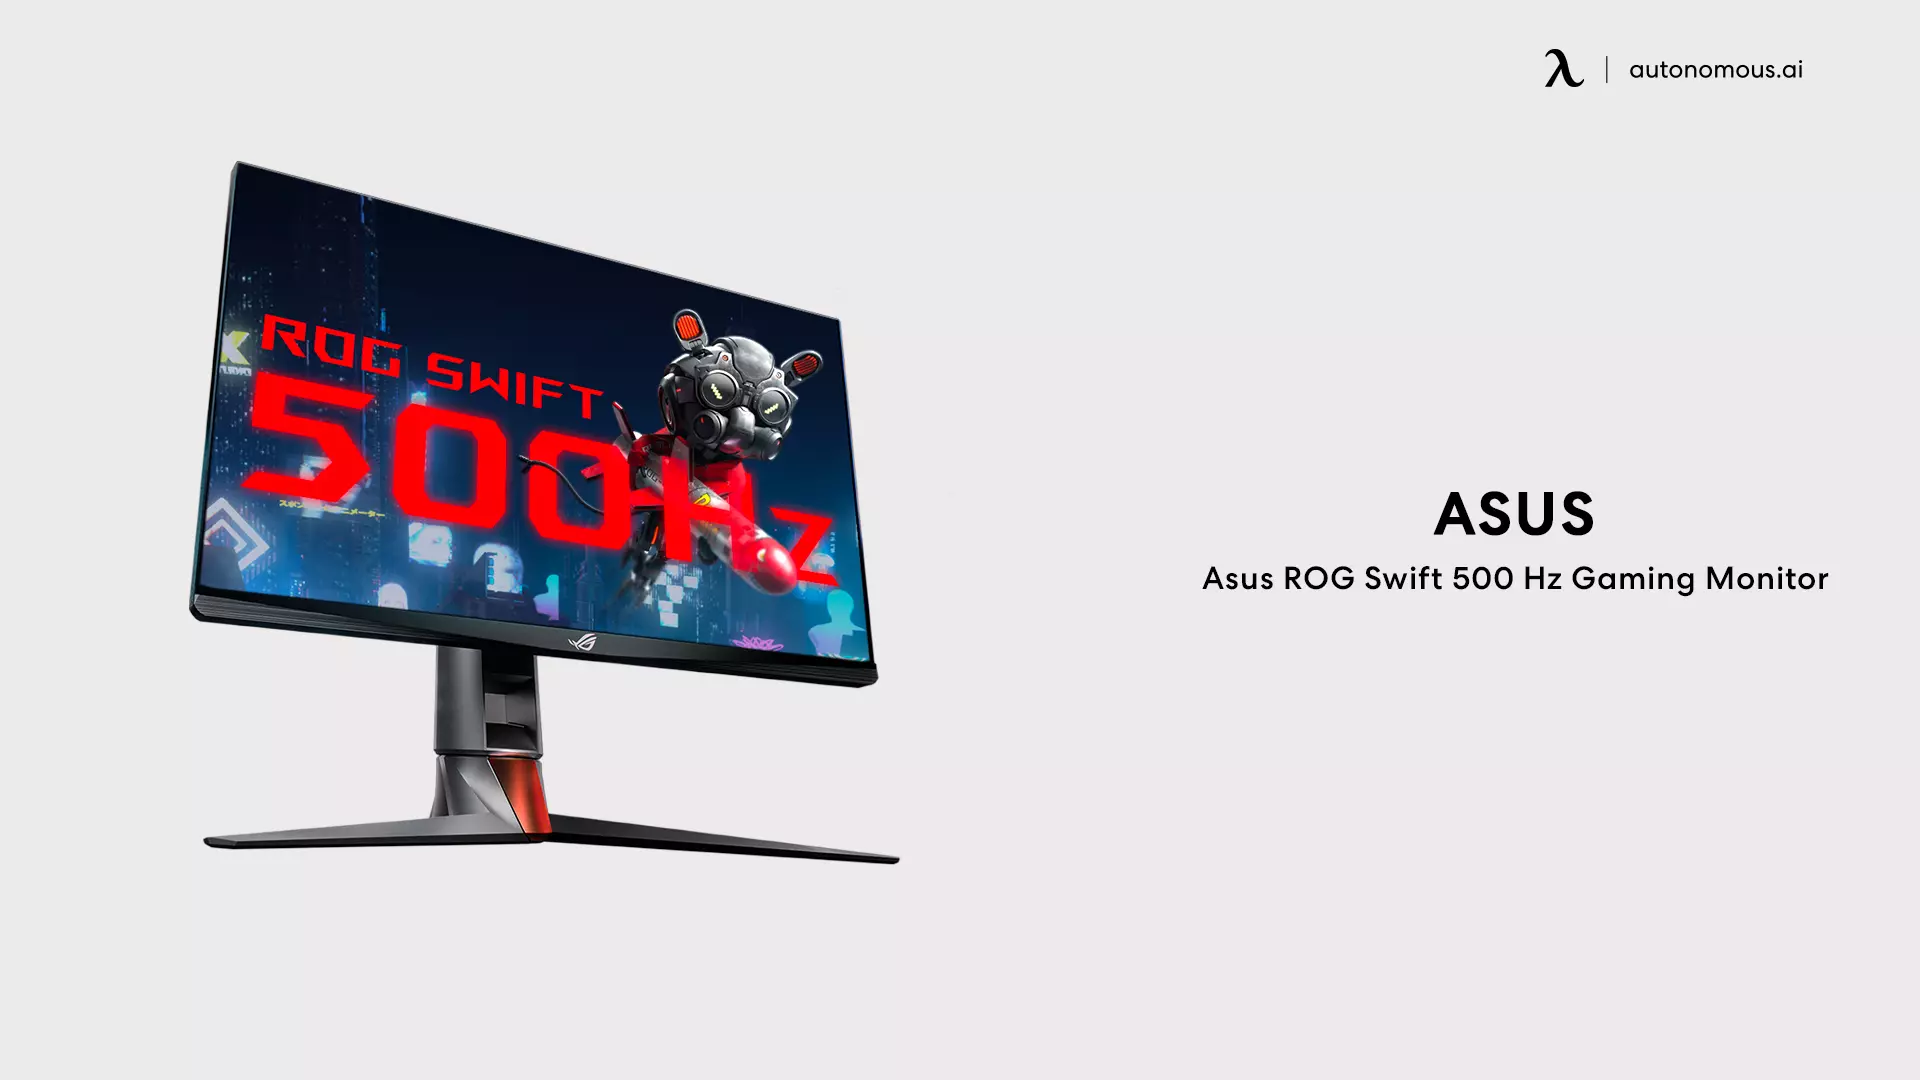 Asus ROG Swift 500 Hz Gaming Monitor